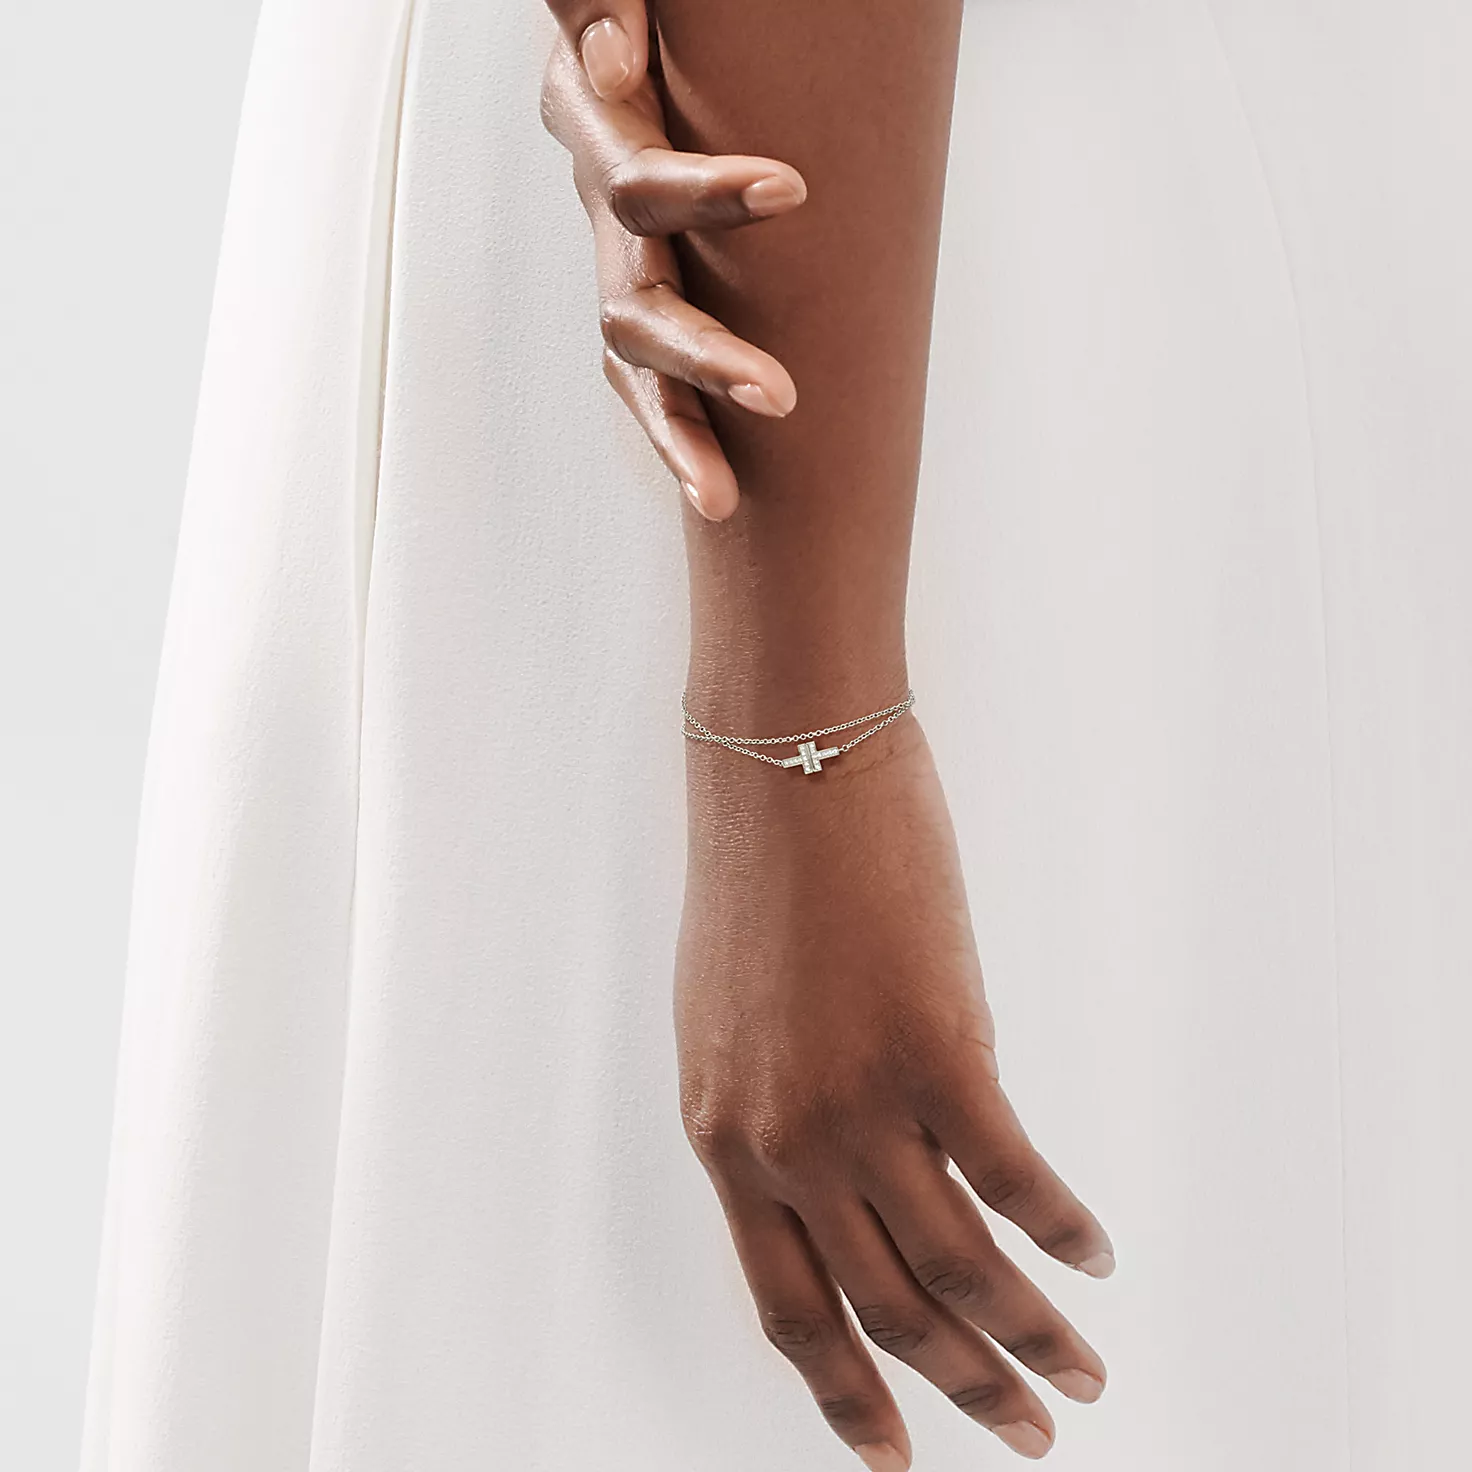 Tiffany T:다이아몬드 더블 체인 브레이슬릿, 18K 화이트 골드 이미지 번호 1